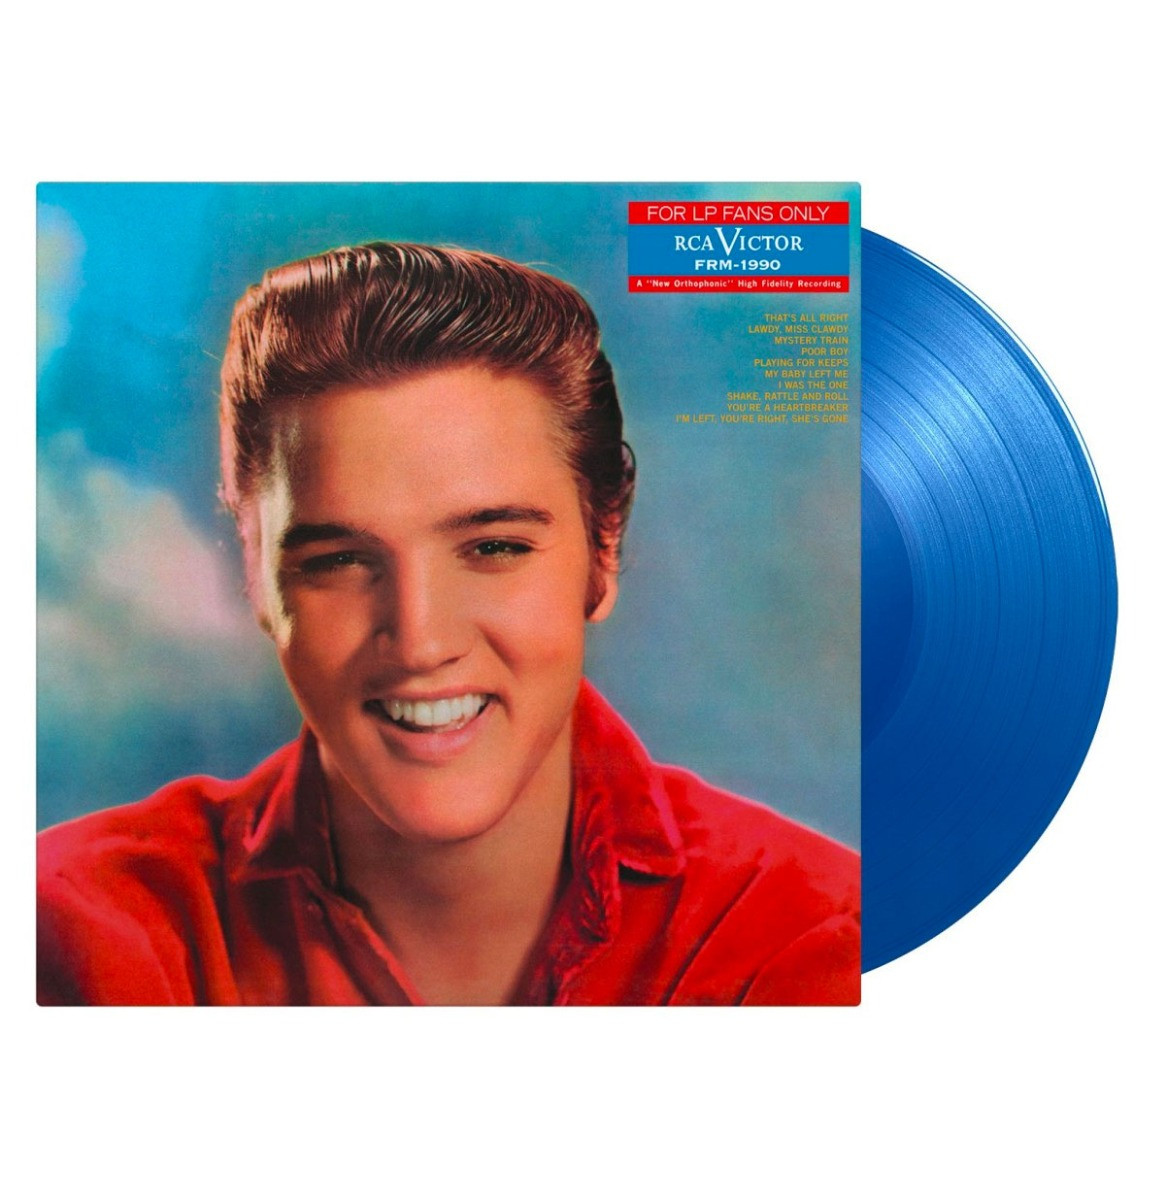 Elvis Presley - For Lp Fans Only (Gekleurd Vinyl) LP